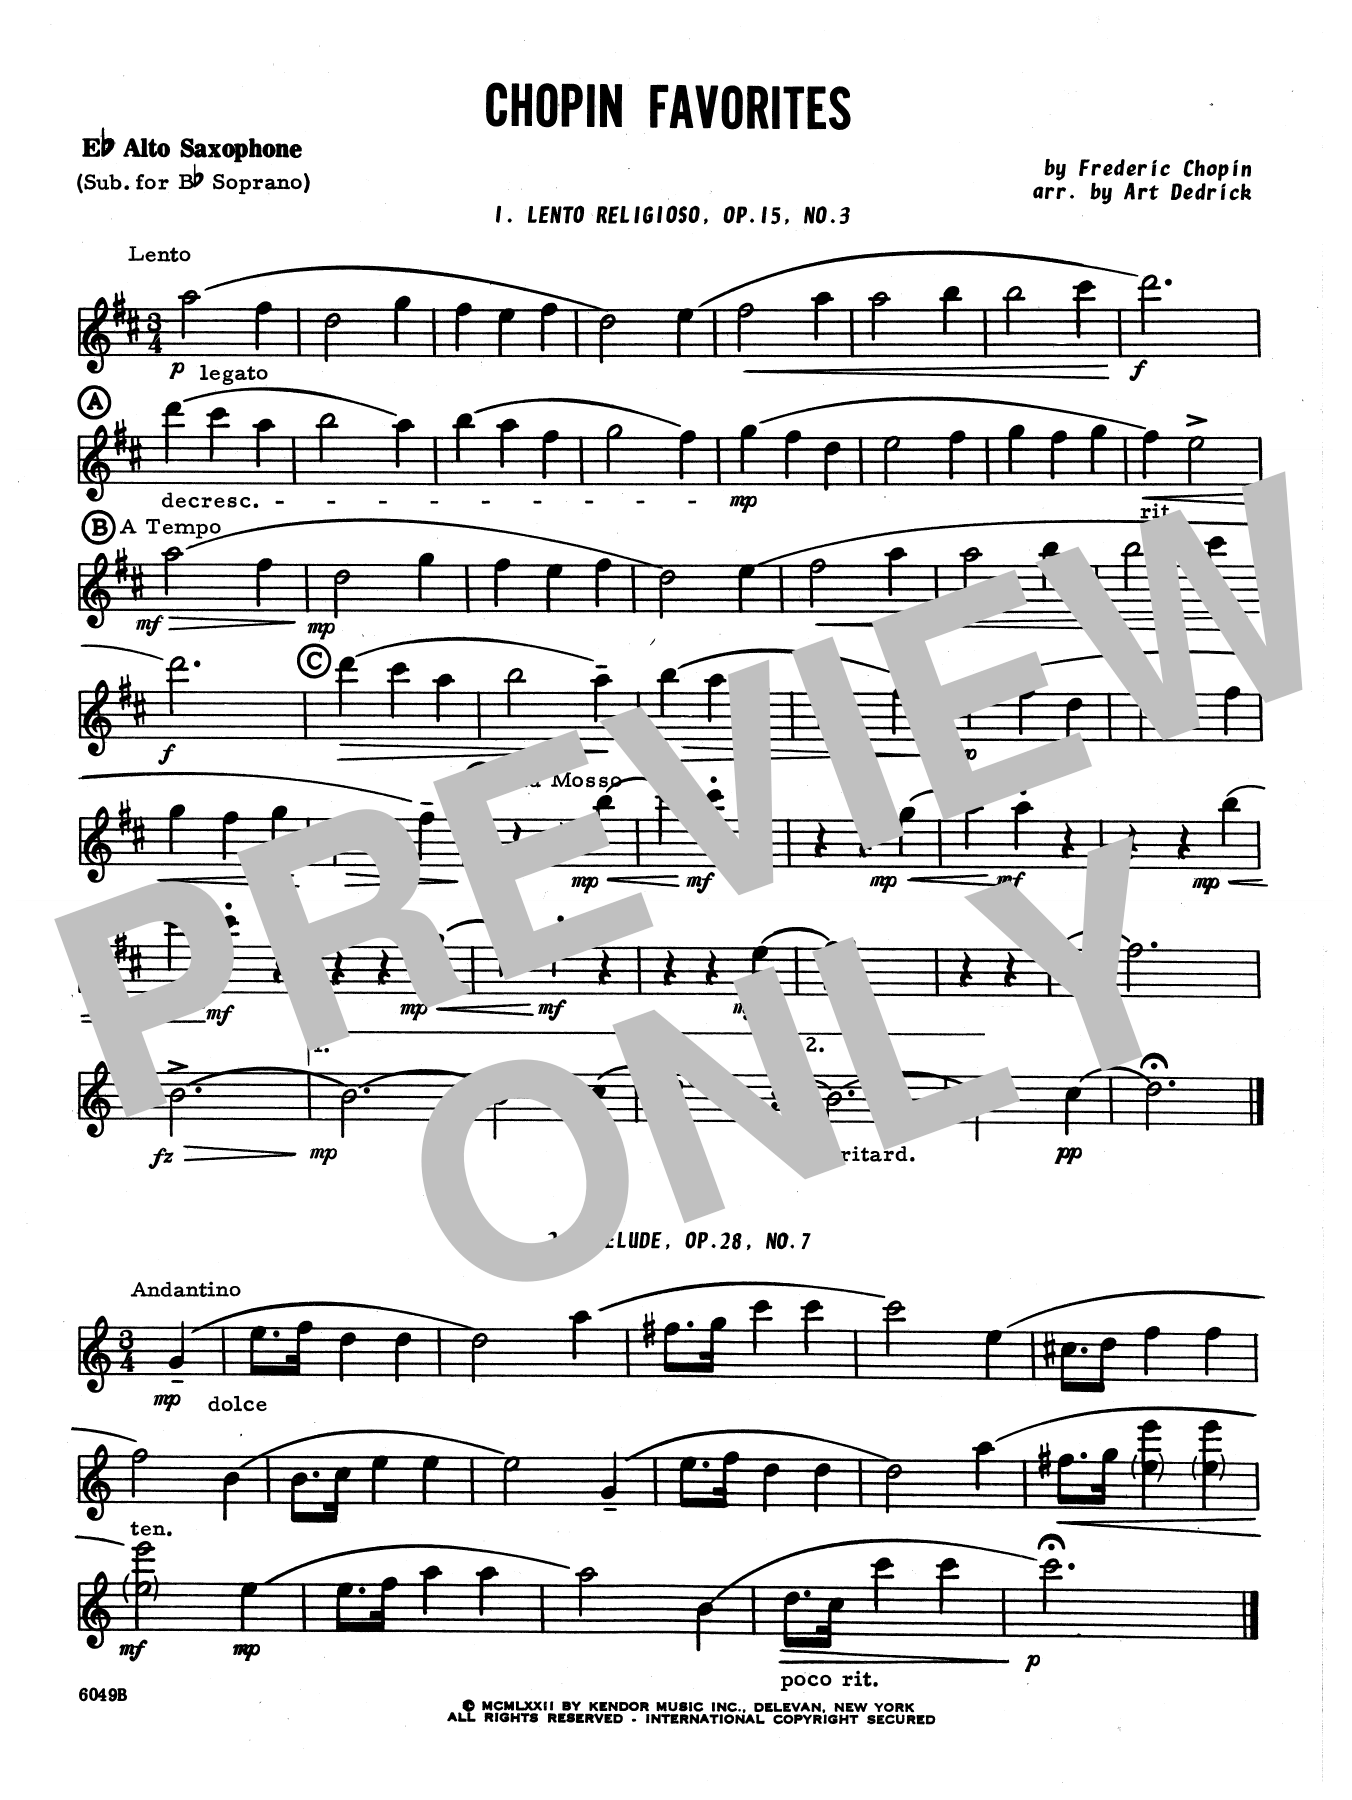 Chopin Favorites - Opt. Alto Sax (Woodwind Ensemble) von Art Dedrick